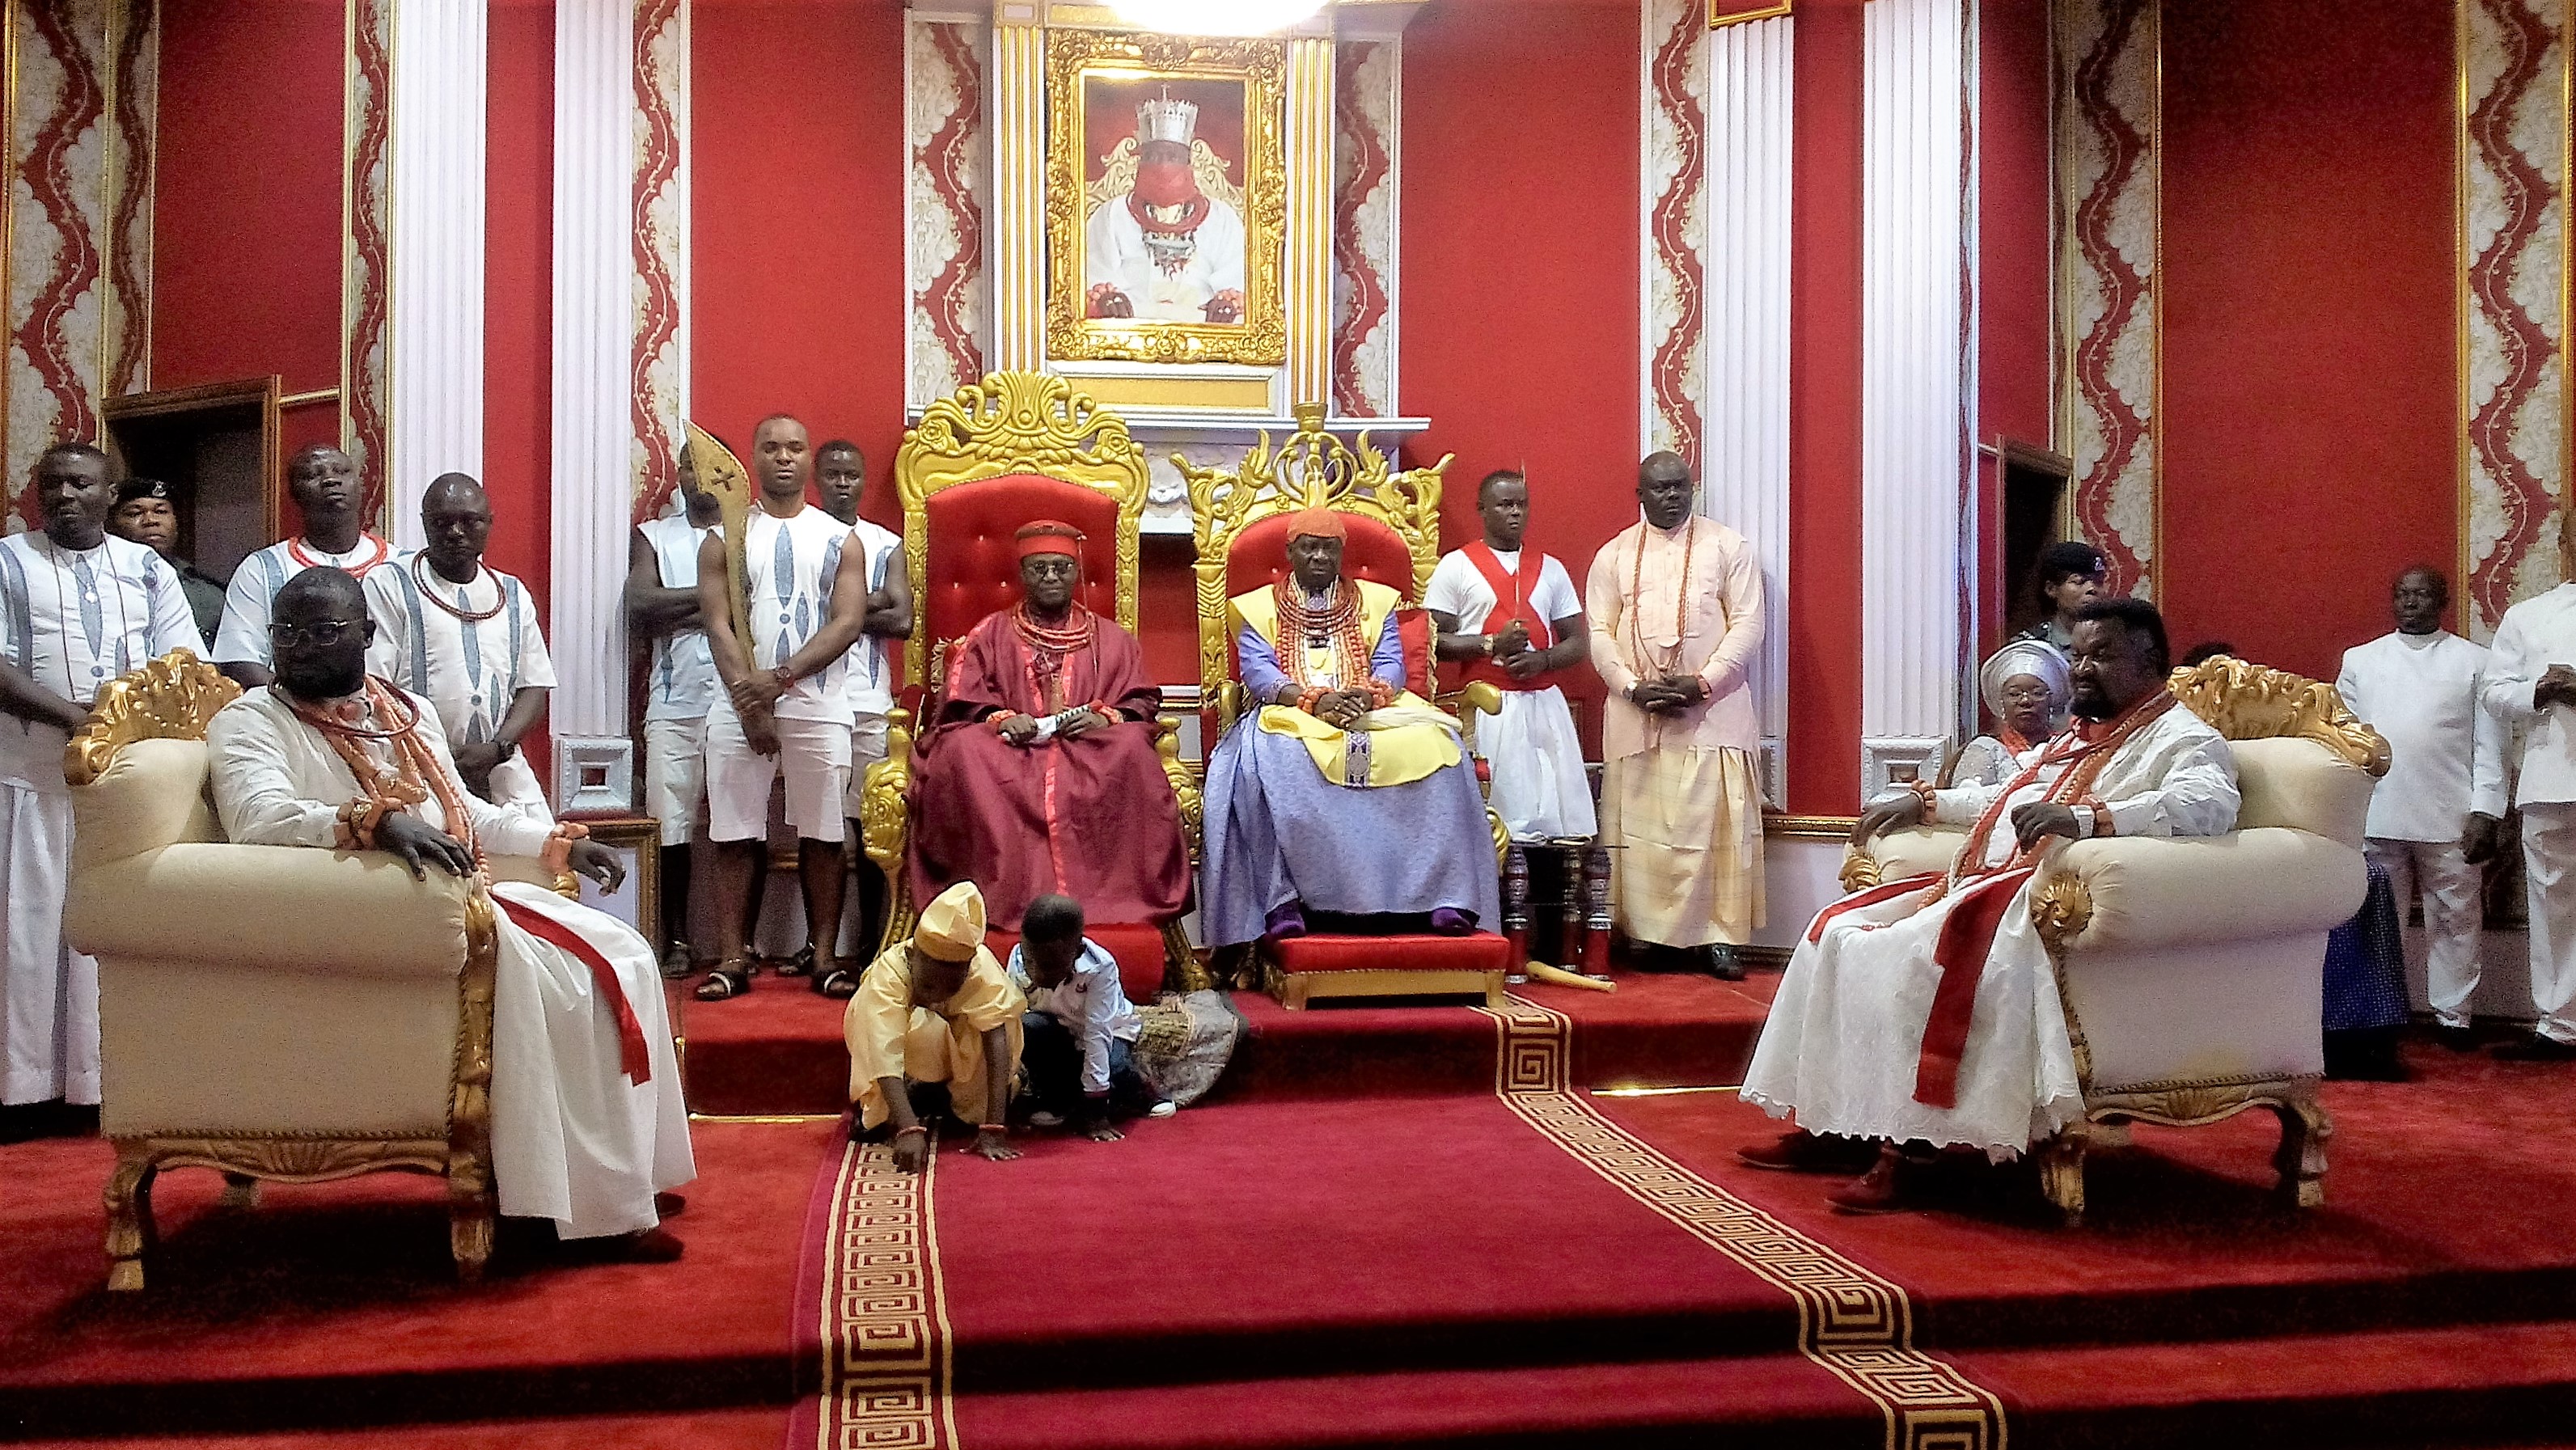 My visit will explore more factors that bind us, Oba of Benin assures Warri Monarch